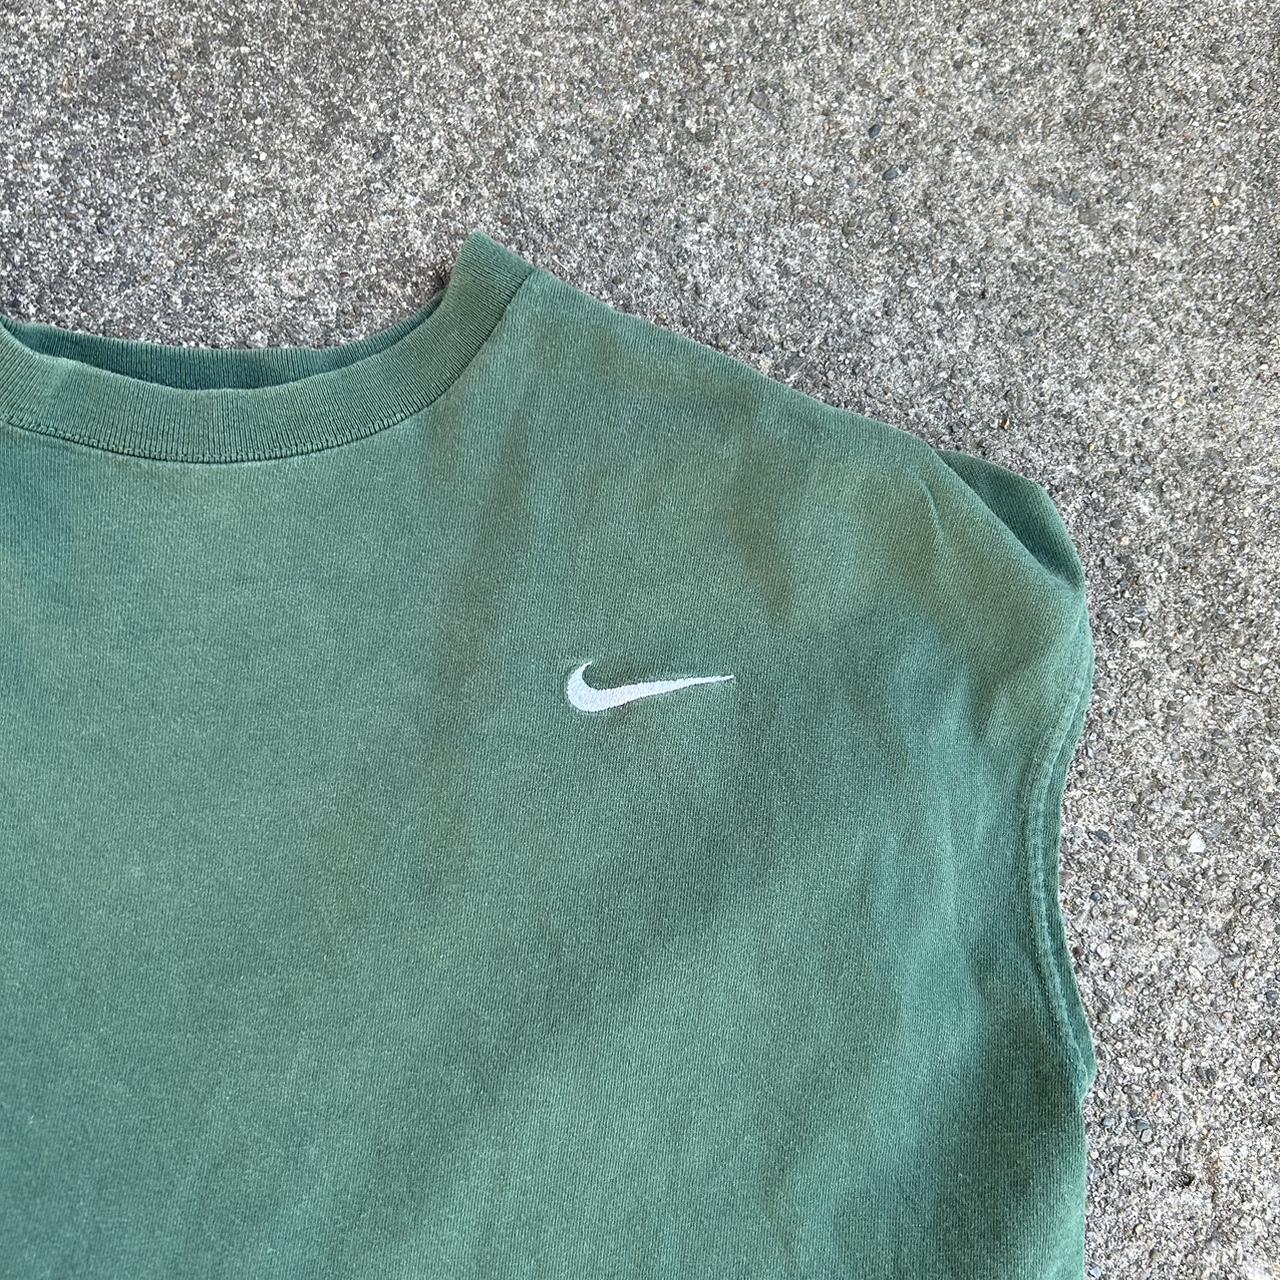 Nike Men's Green and White Vest